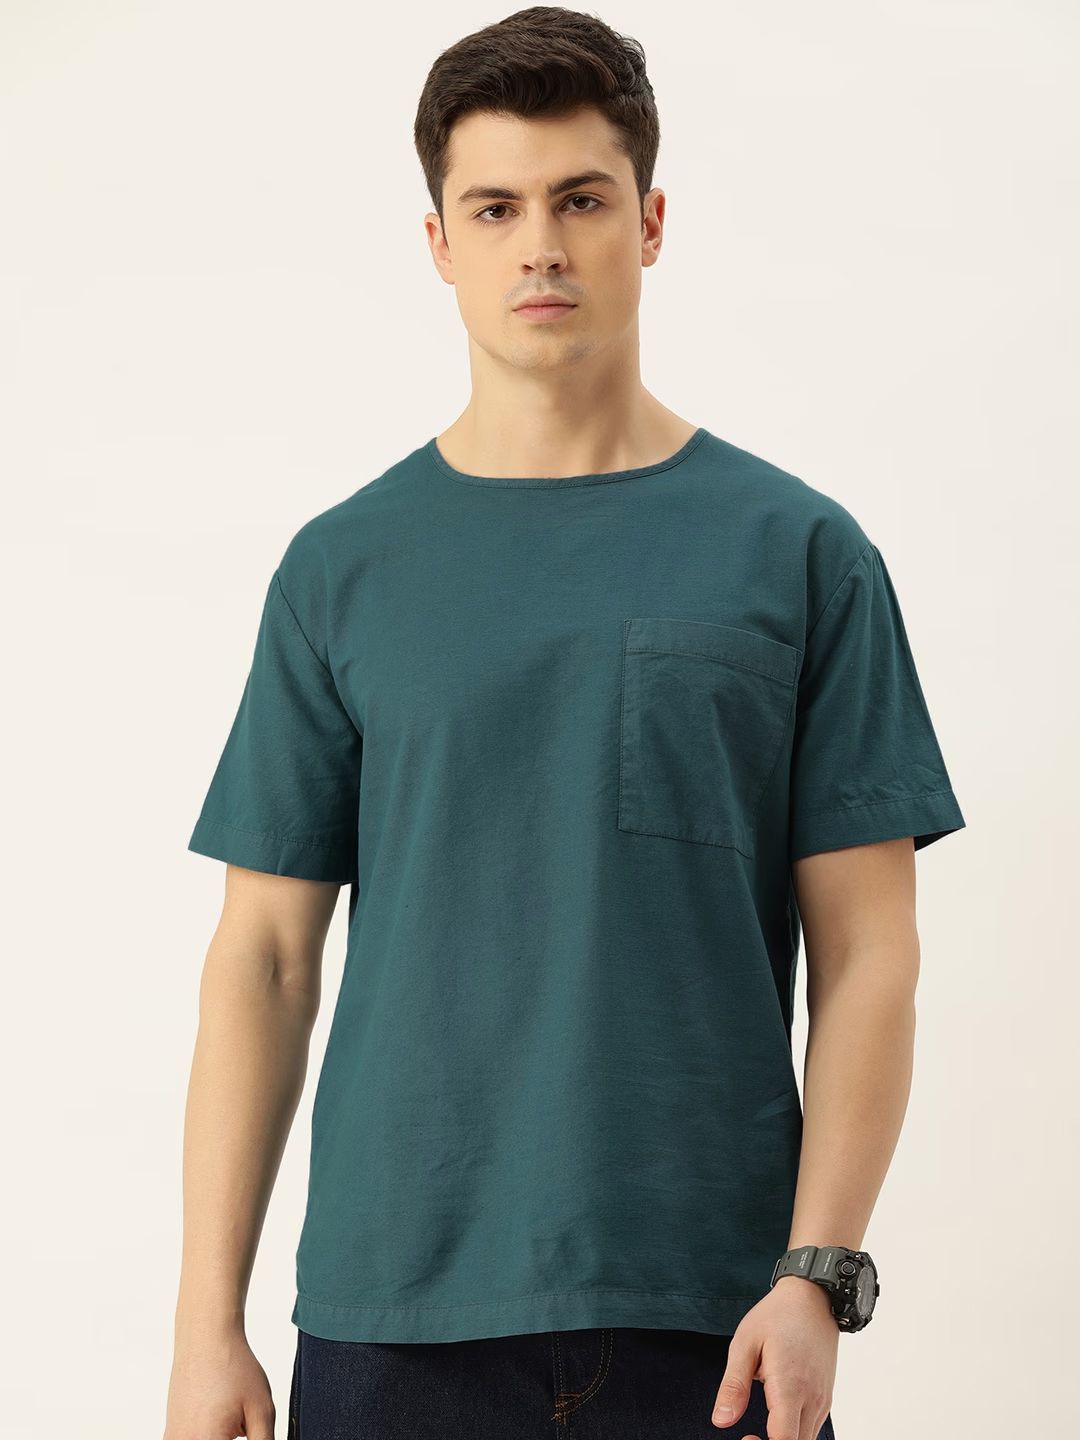     			Bene Kleed Cotton Blend Regular Fit Solids Half Sleeves Men's Casual Shirt - Teal ( Pack of 1 )